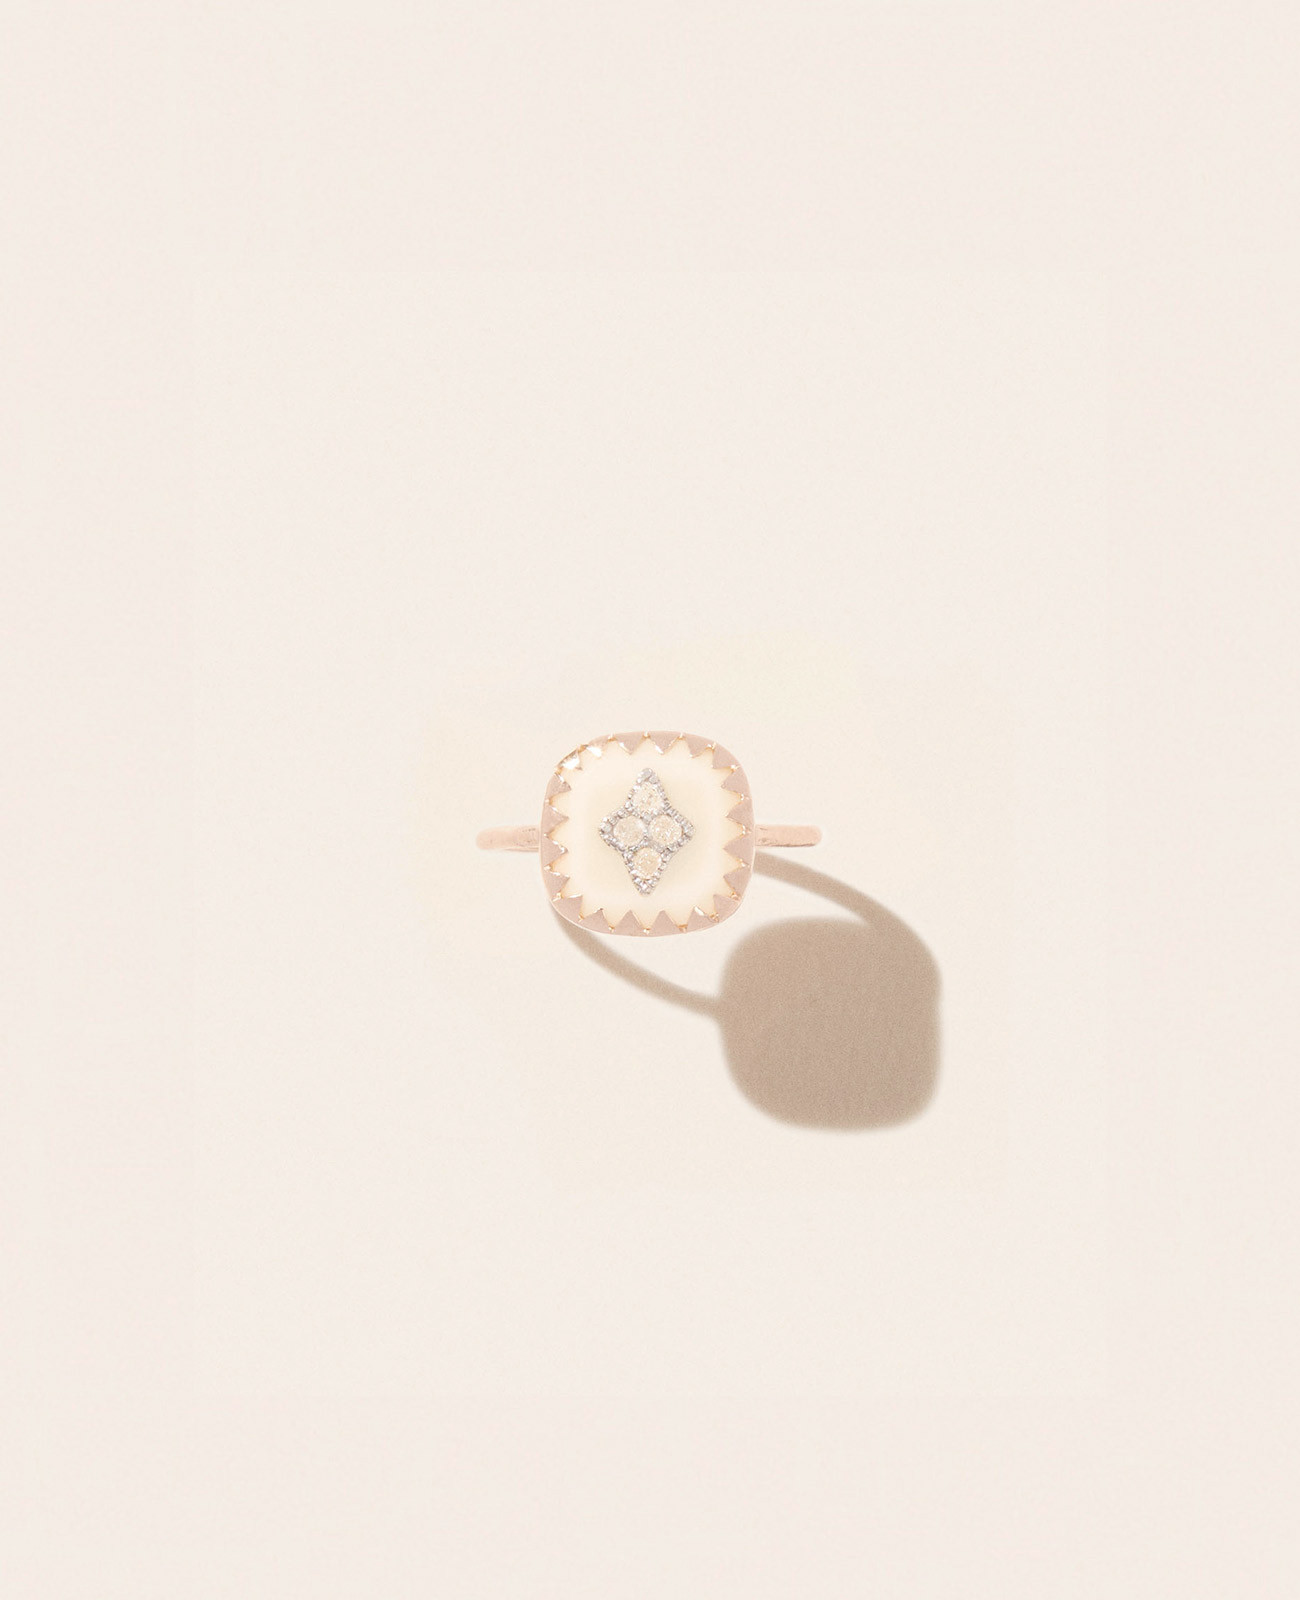 PIERROT WHITE ring pascale monvoisin jewelry paris